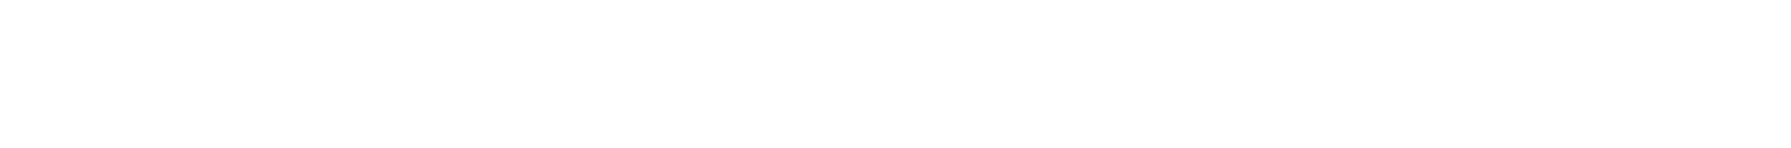 Marsh & McLennan Companies logo large for dark backgrounds (transparent PNG)